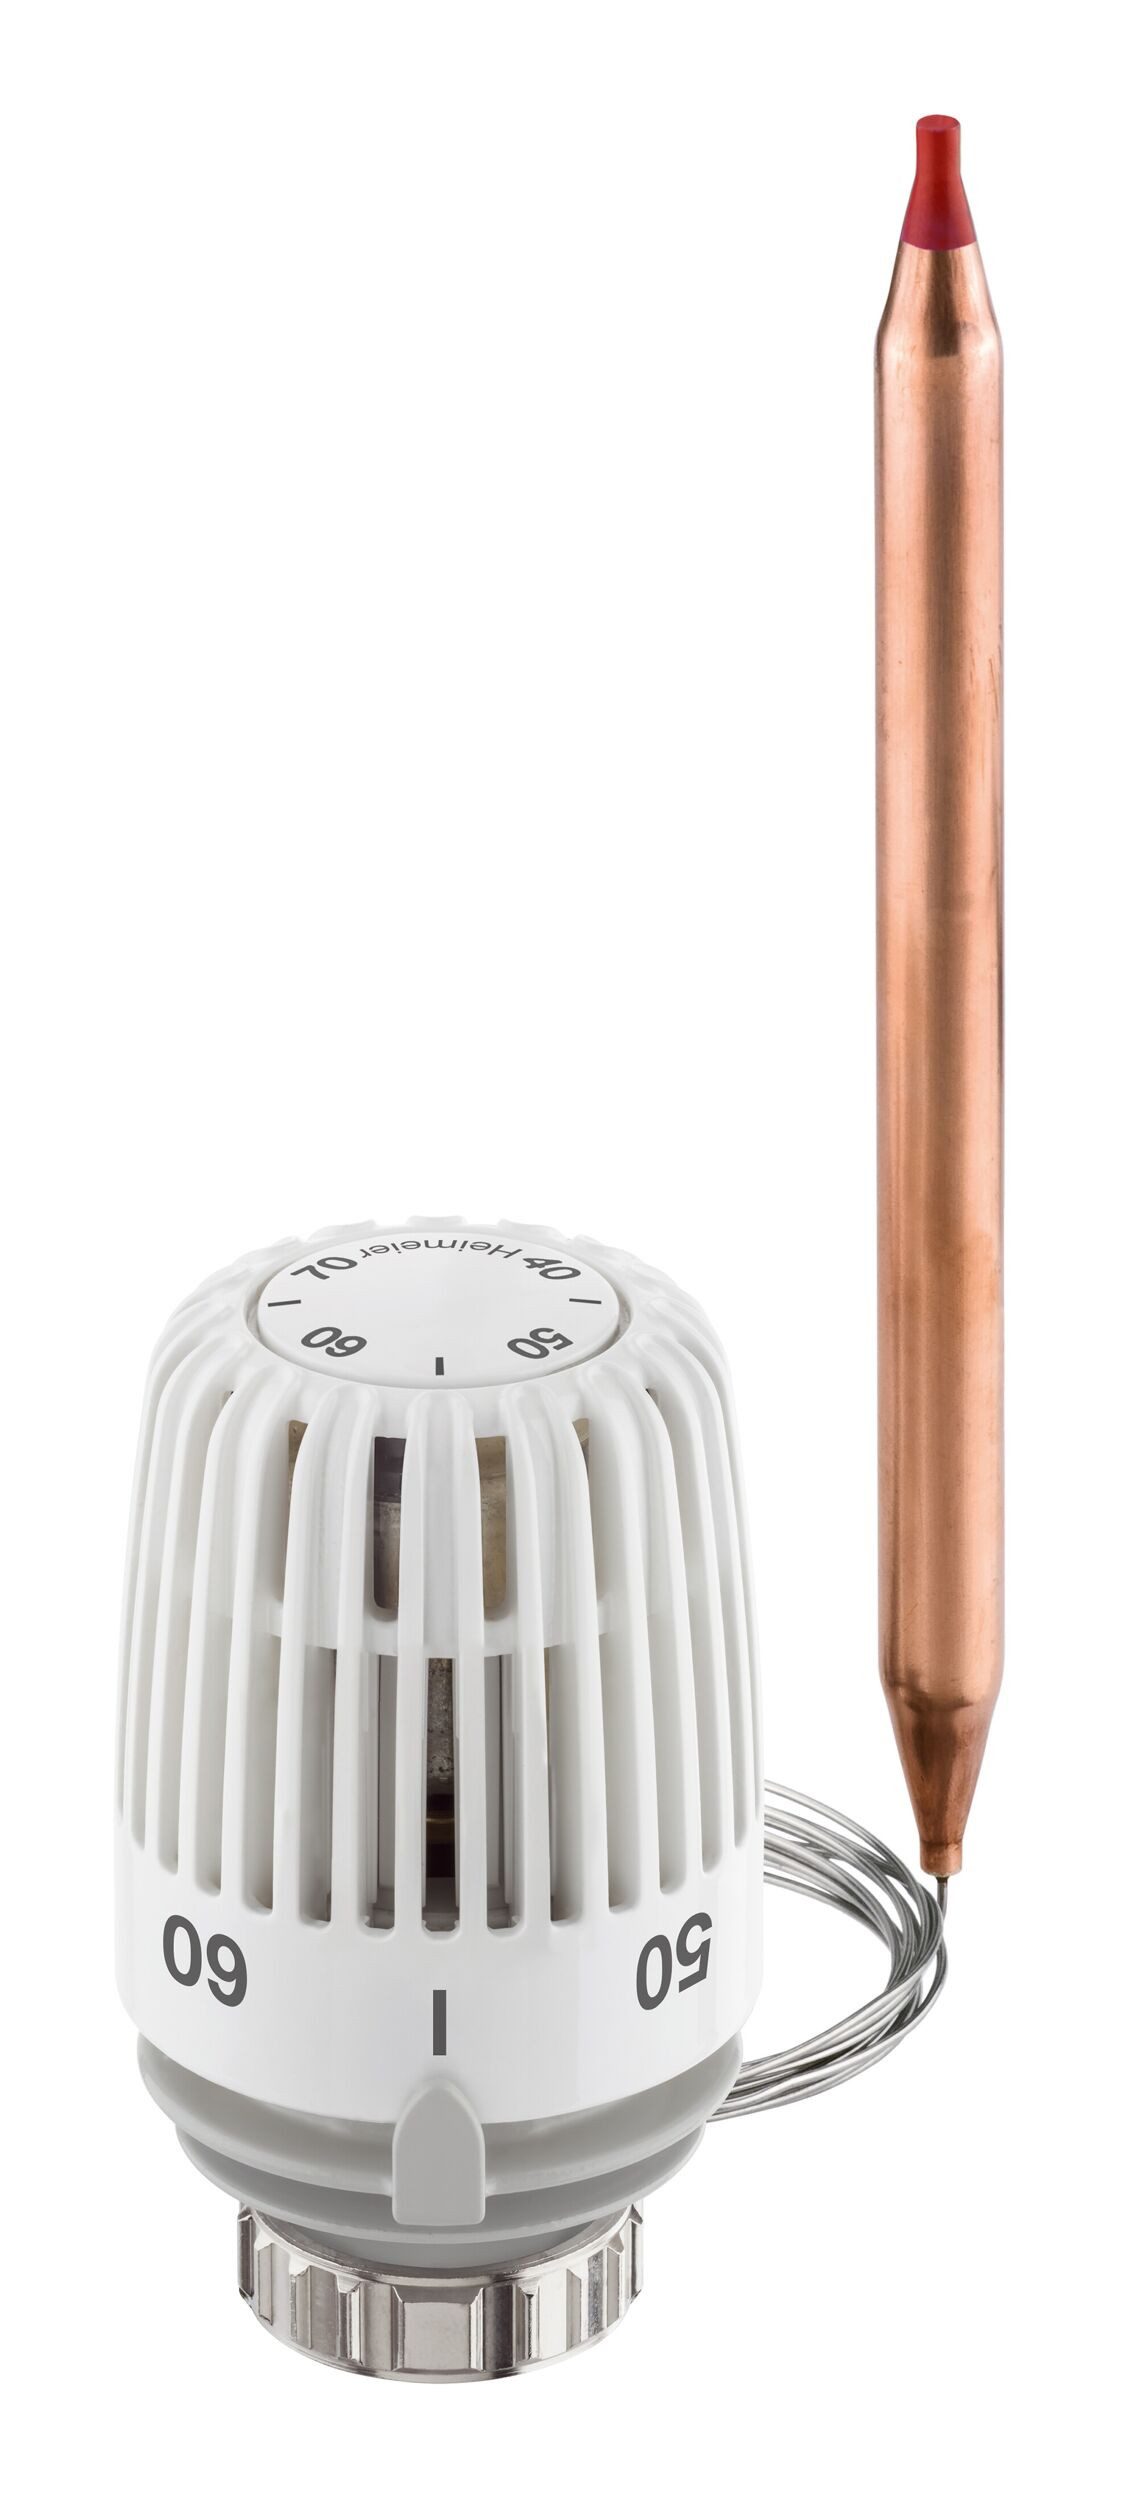 IMI Heimeier Heizkörperthermostat, Thermostat-Kopf K 20-50 °C, weiß, Kapillarrohrlänge 2